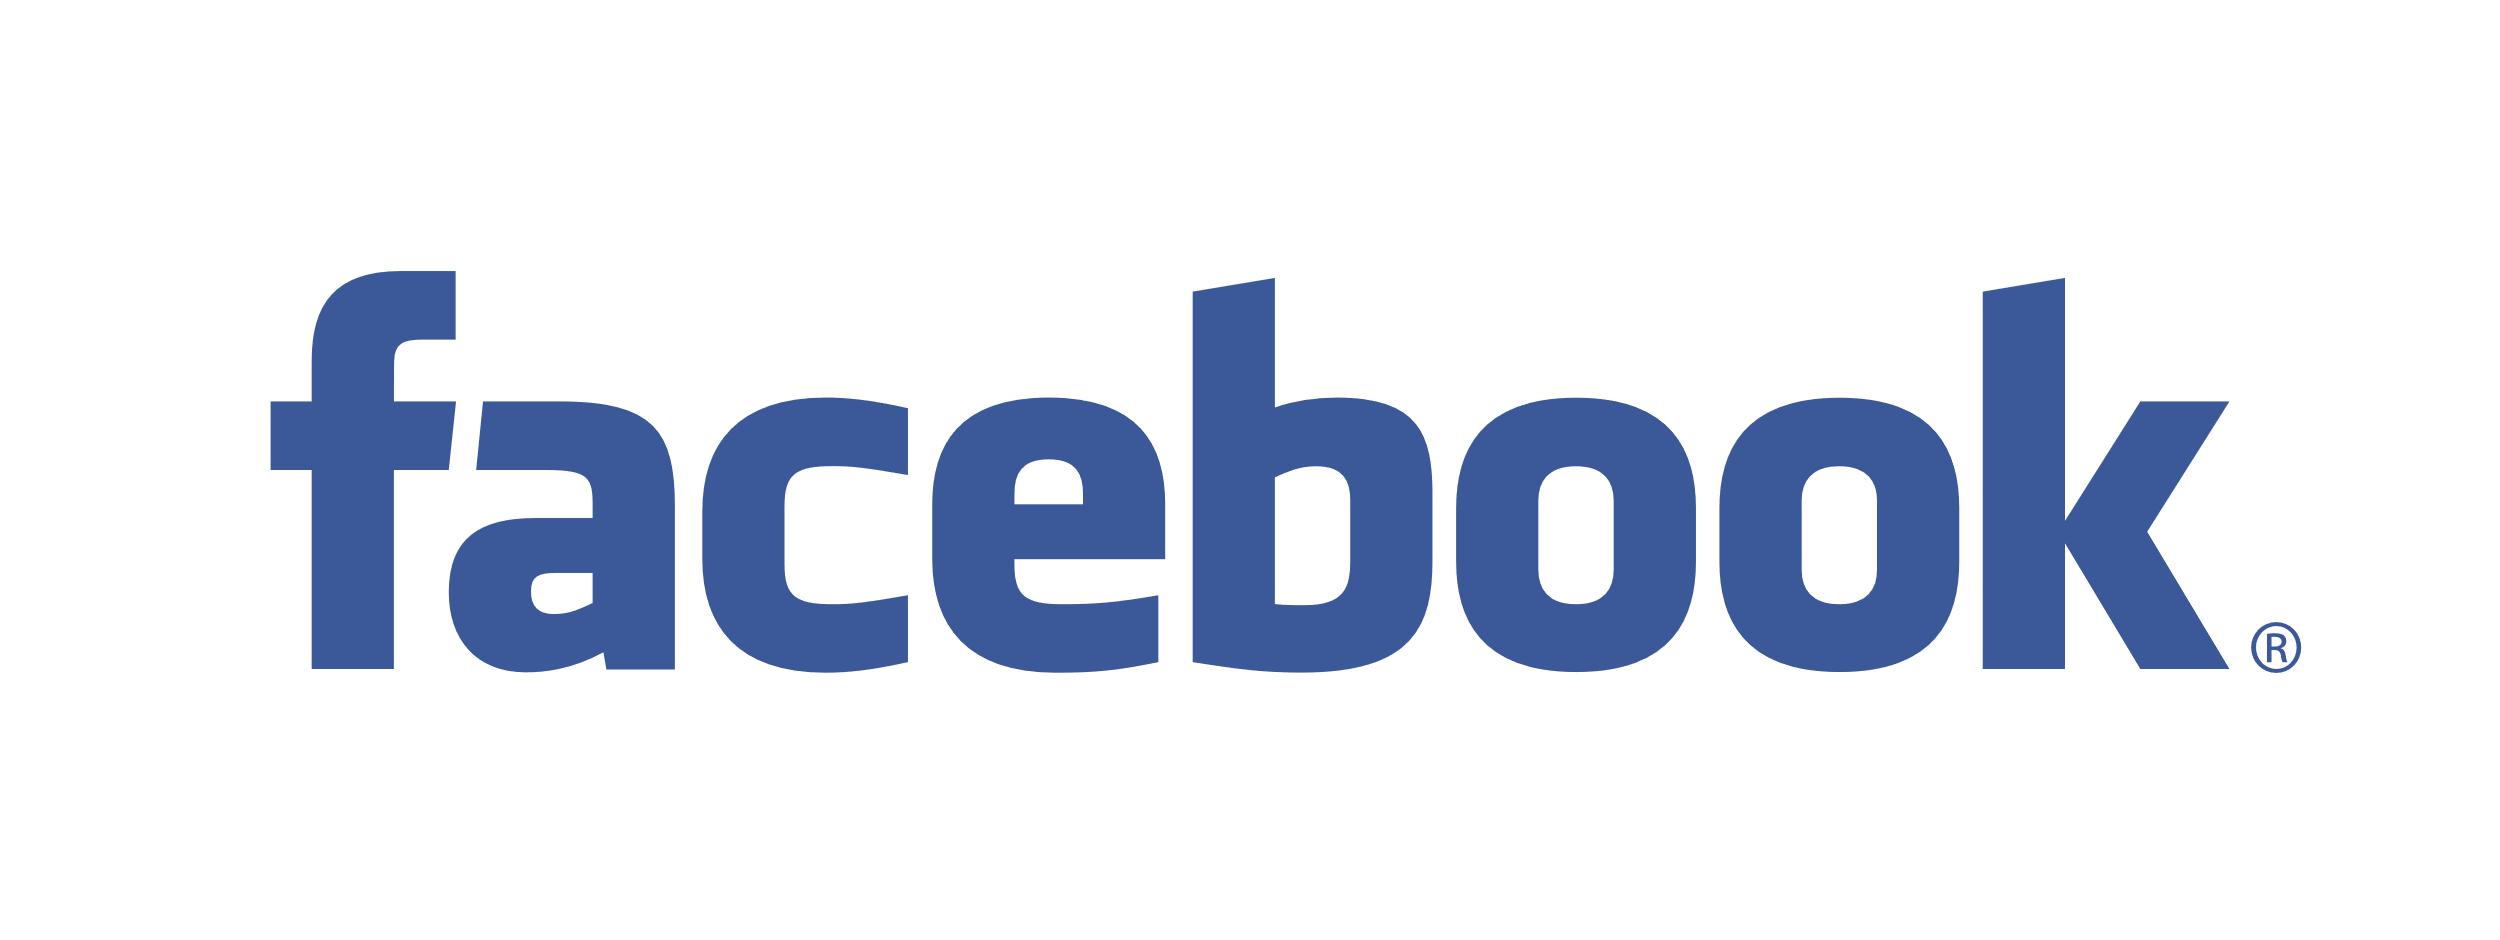 Big Facebook Logo - facebook-logo-big_2500x940 | Health, Energy & Beauty